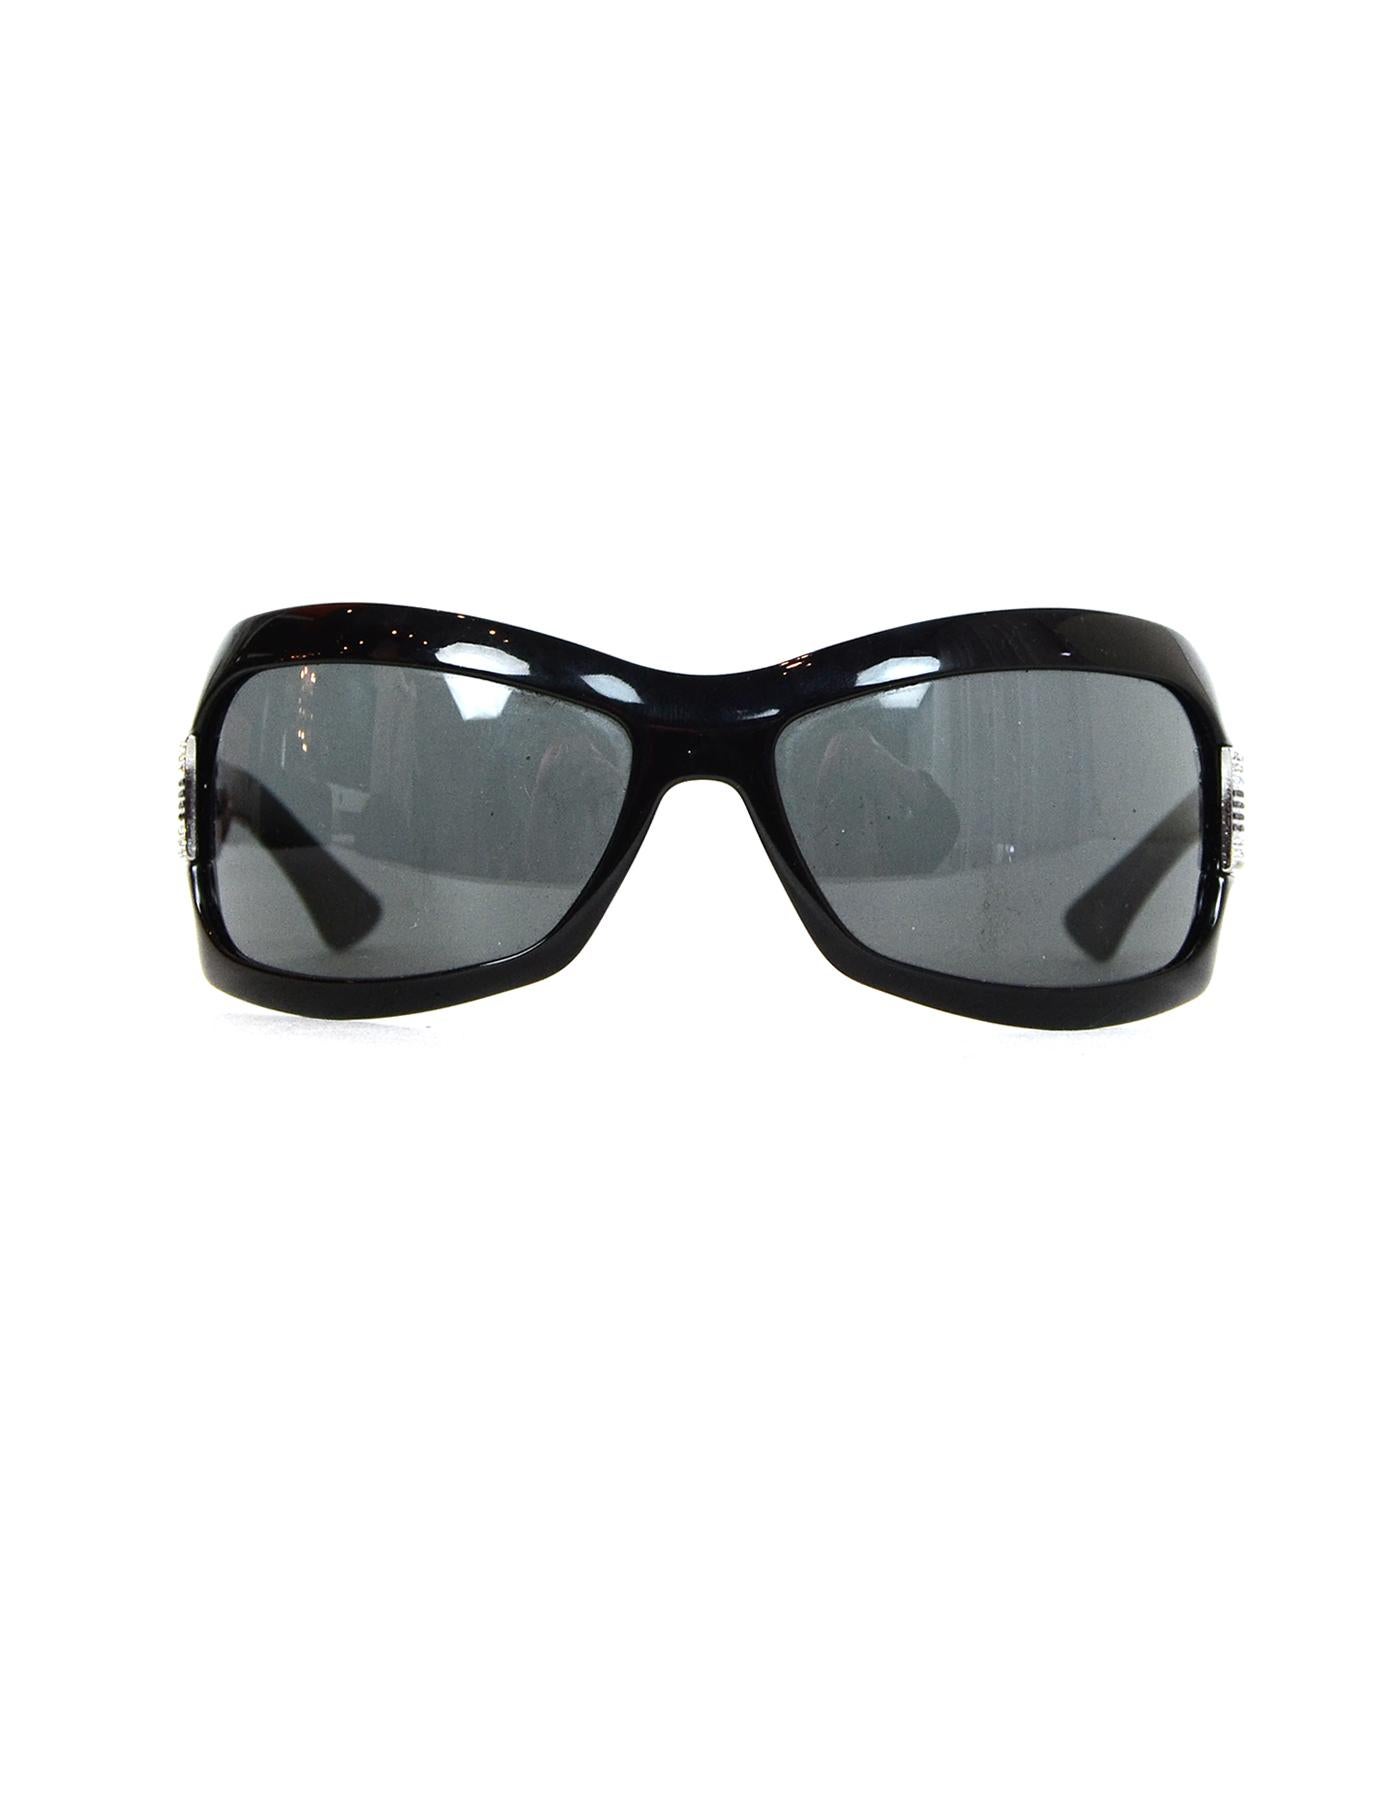 Gucci Black Sunglasses W/ Rhinestones On Arms & Case im Zustand „Hervorragend“ in New York, NY